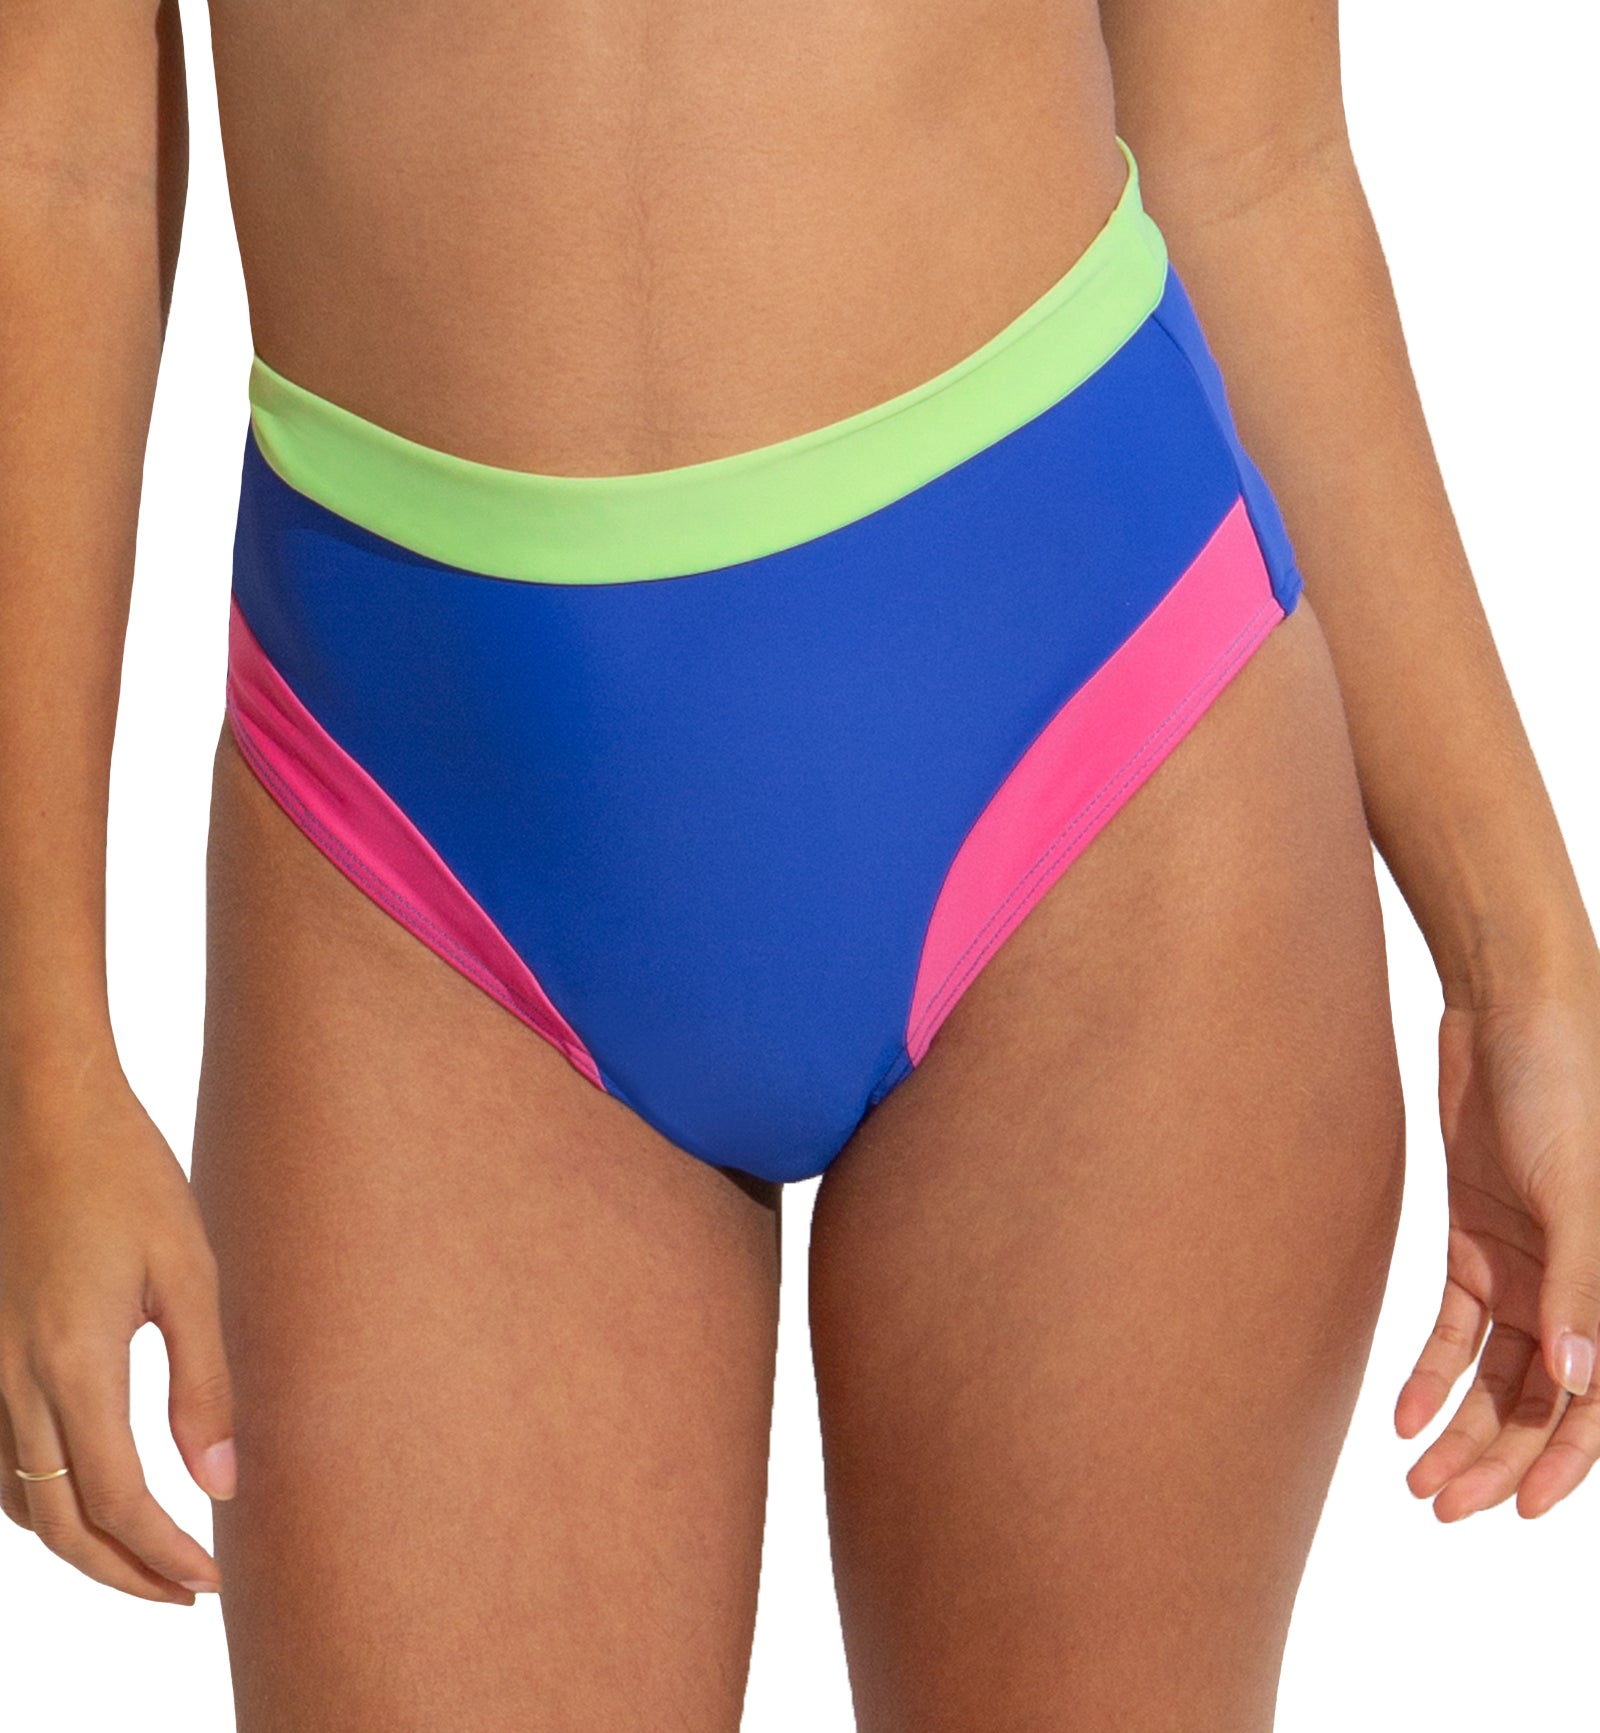 Pour Moi Palm Springs Color Block High Leg Control Swim Brief (25205R),XS,Ultra/Pink/Citrus - Ultramarine/Pink/Citrus,XS